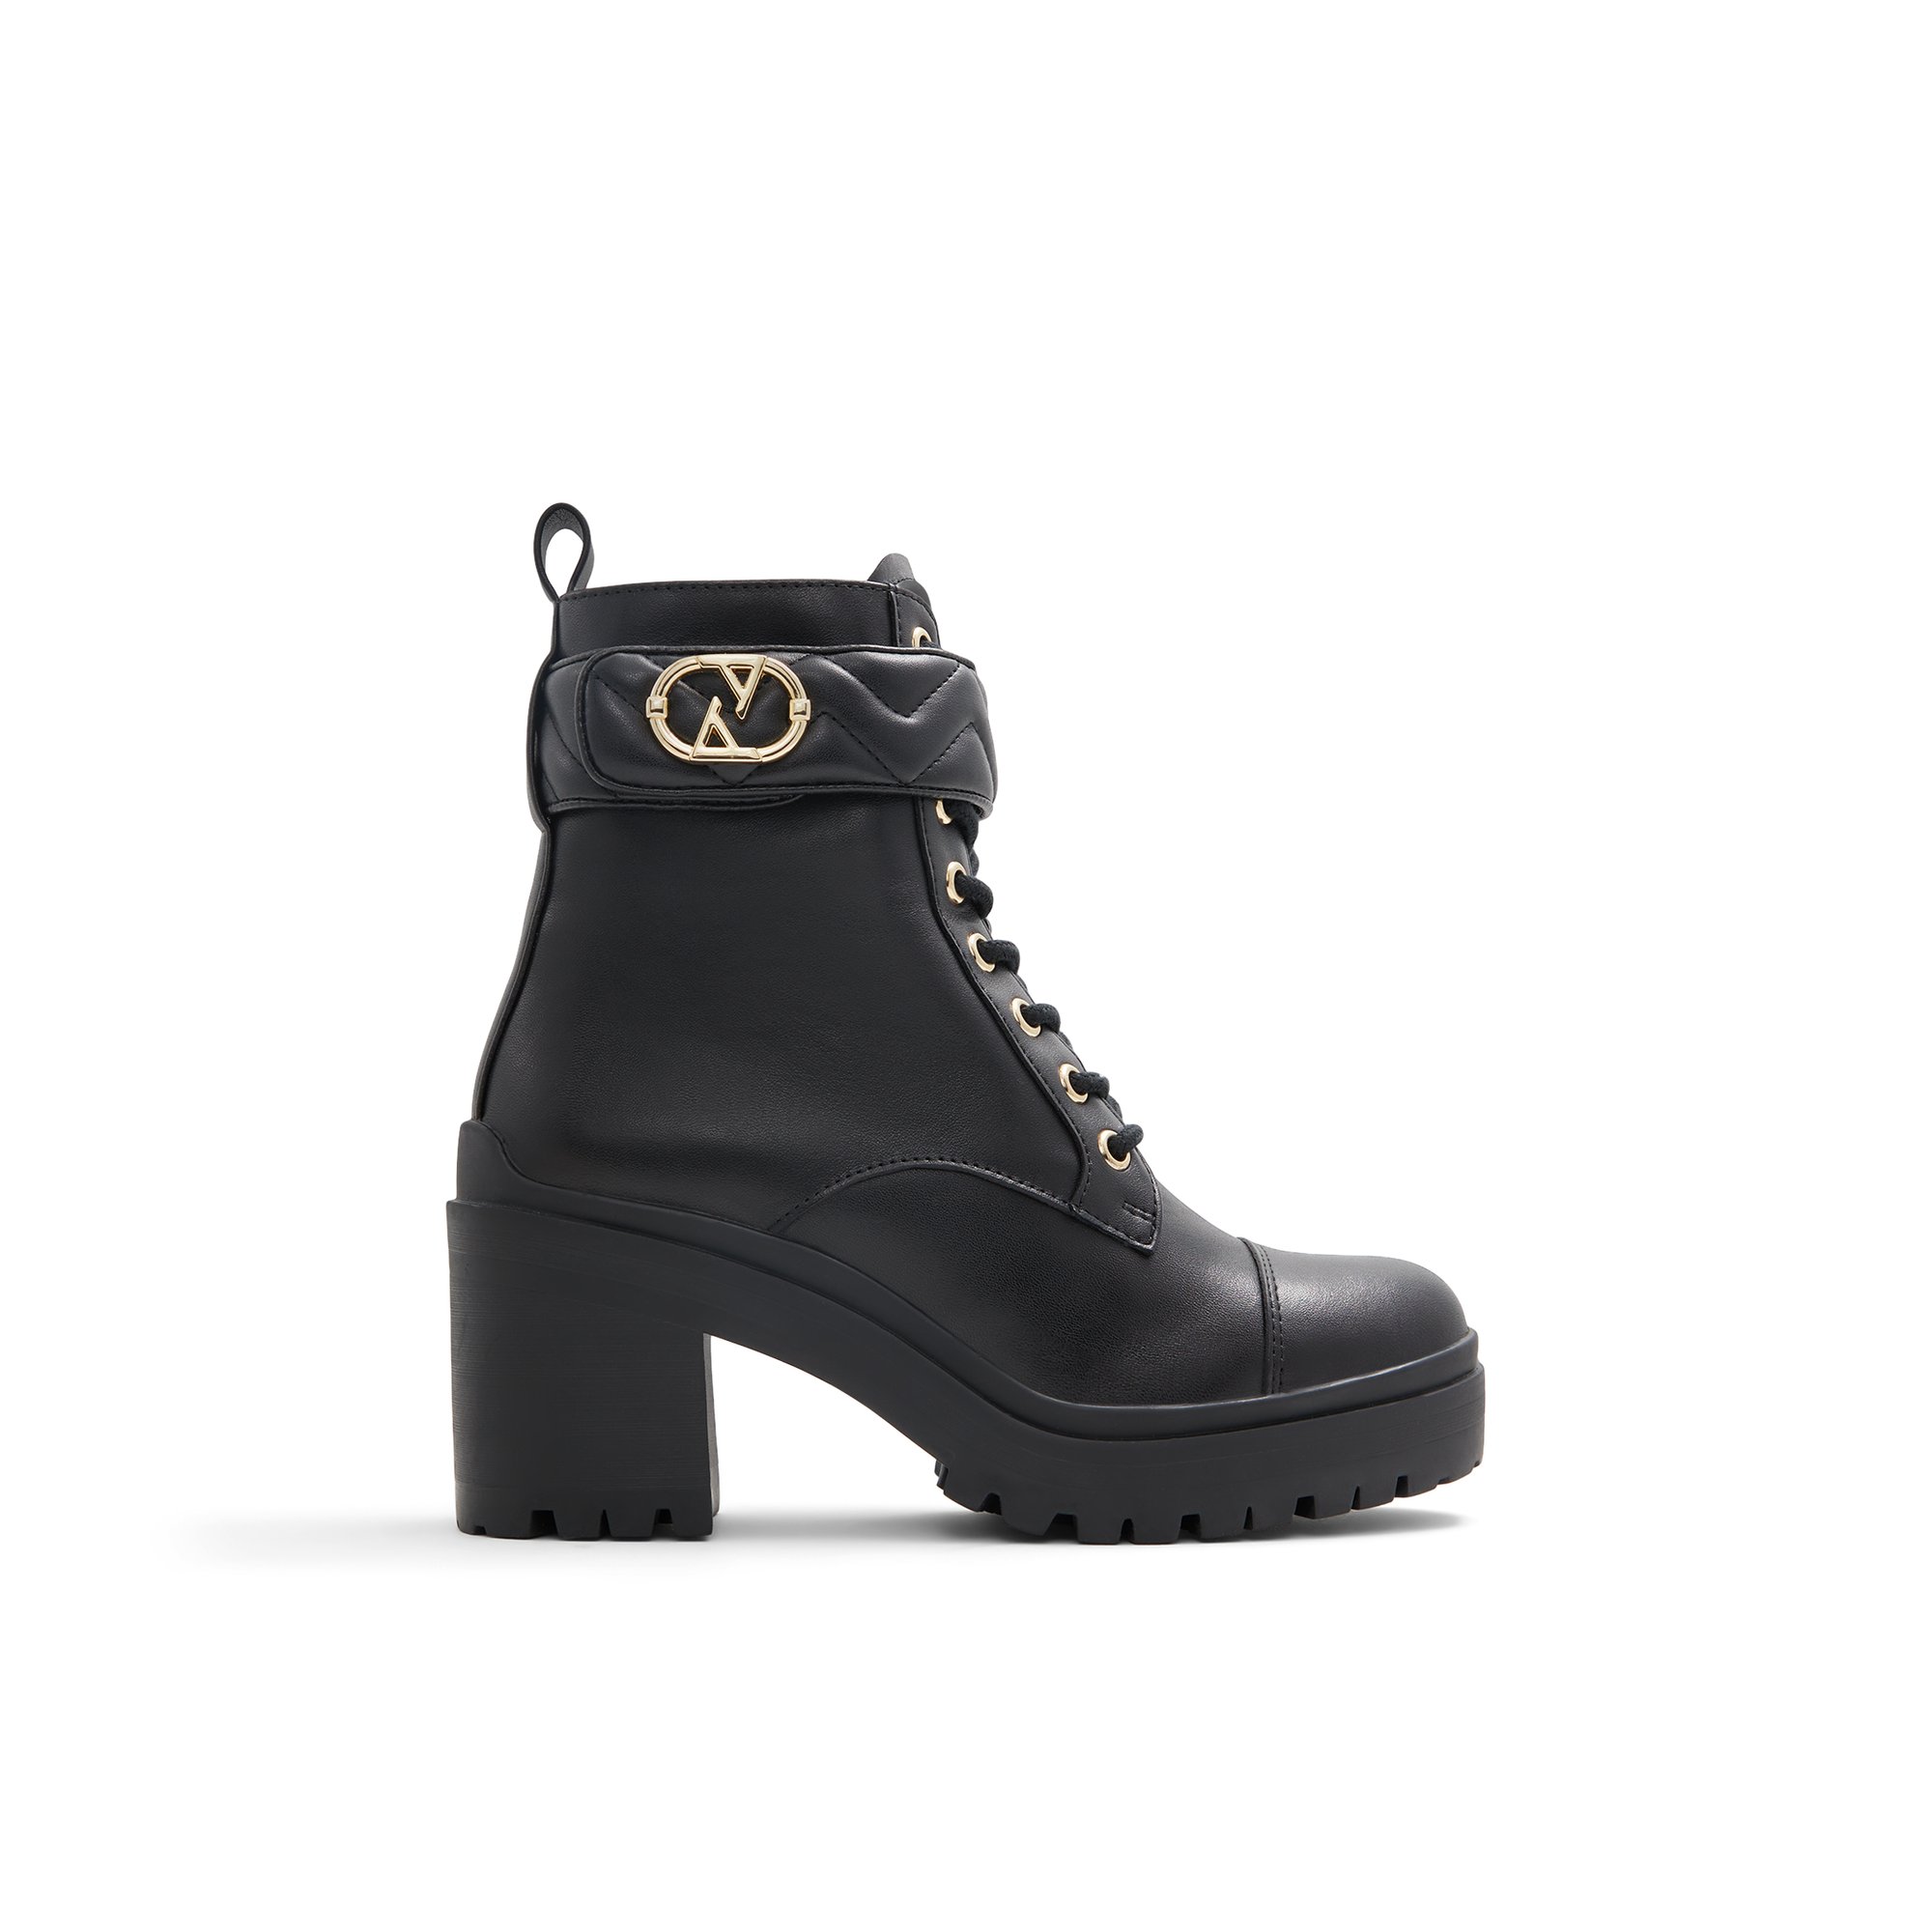 ALDO Farerendar - Women's Casual Boot - Black